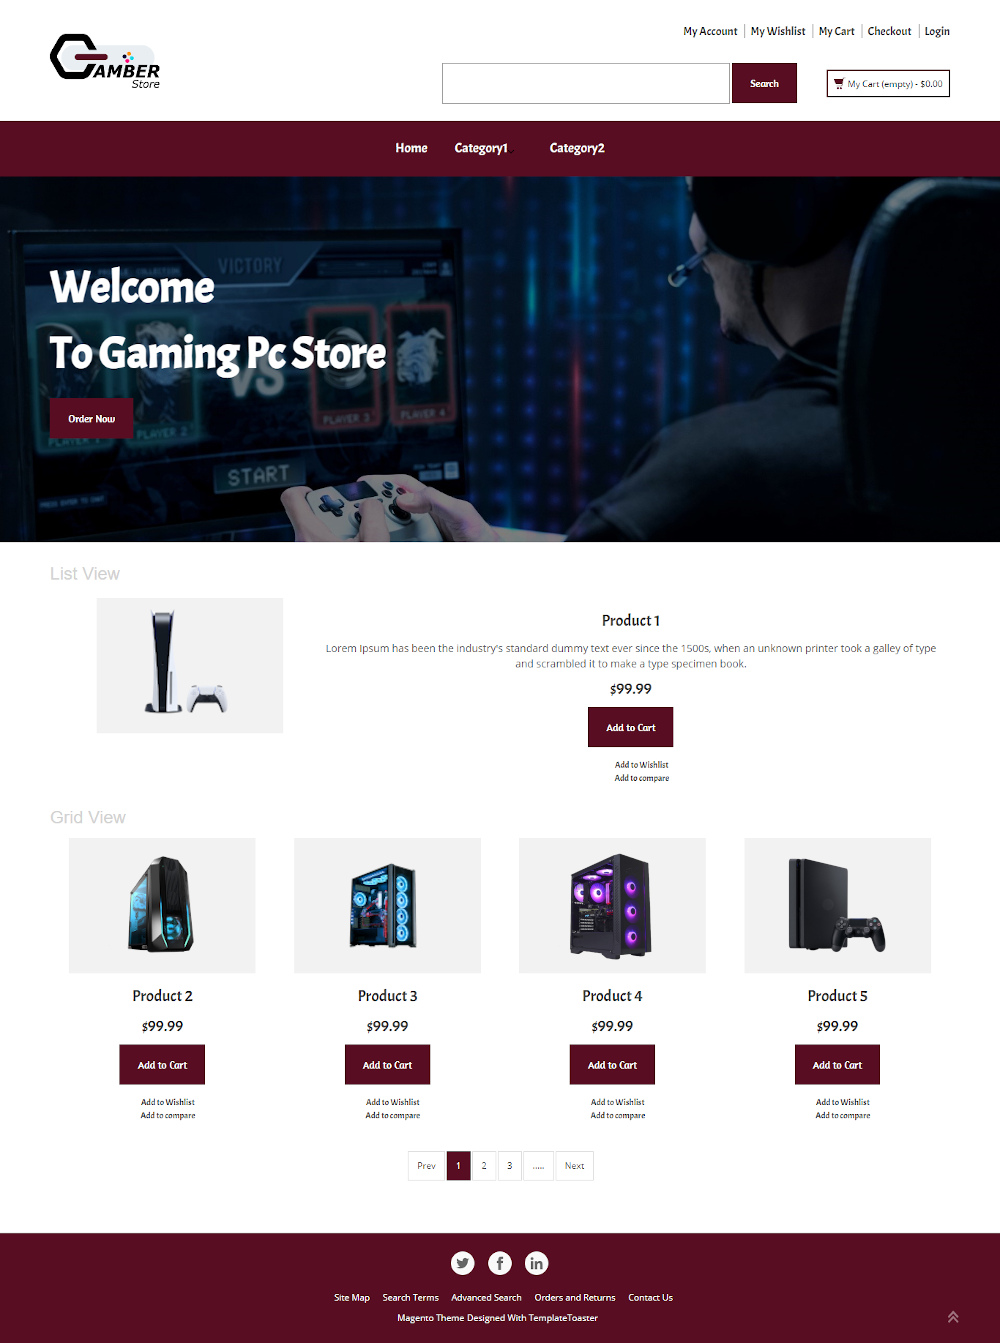 Gamber - Online Gaming Pc Store Magento Theme